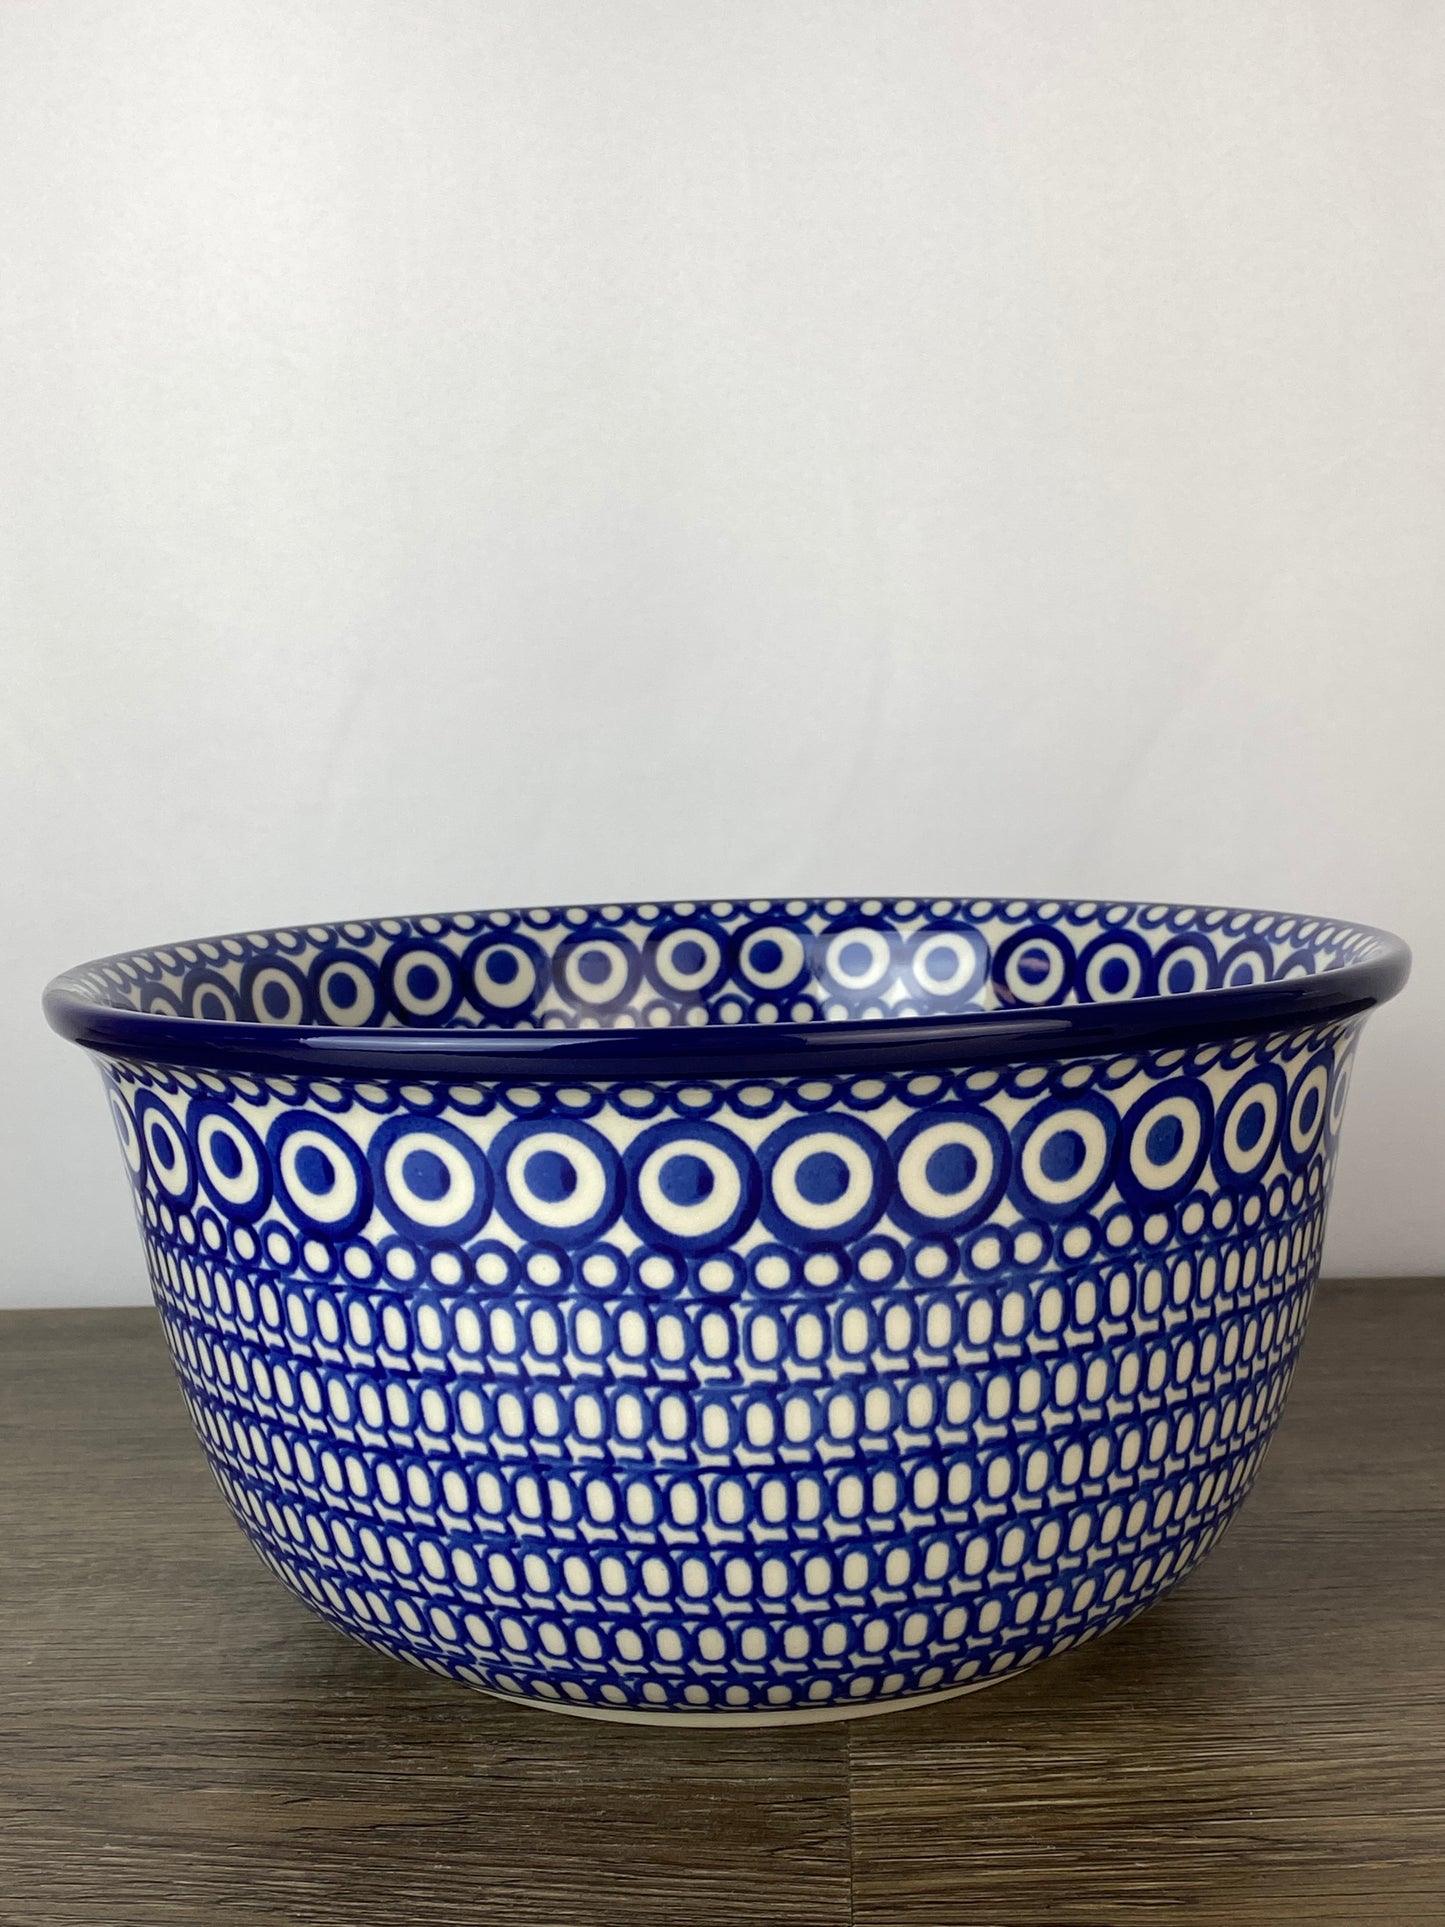 SALE Large Mixing Bowl - Shape 113 - Pattern 13